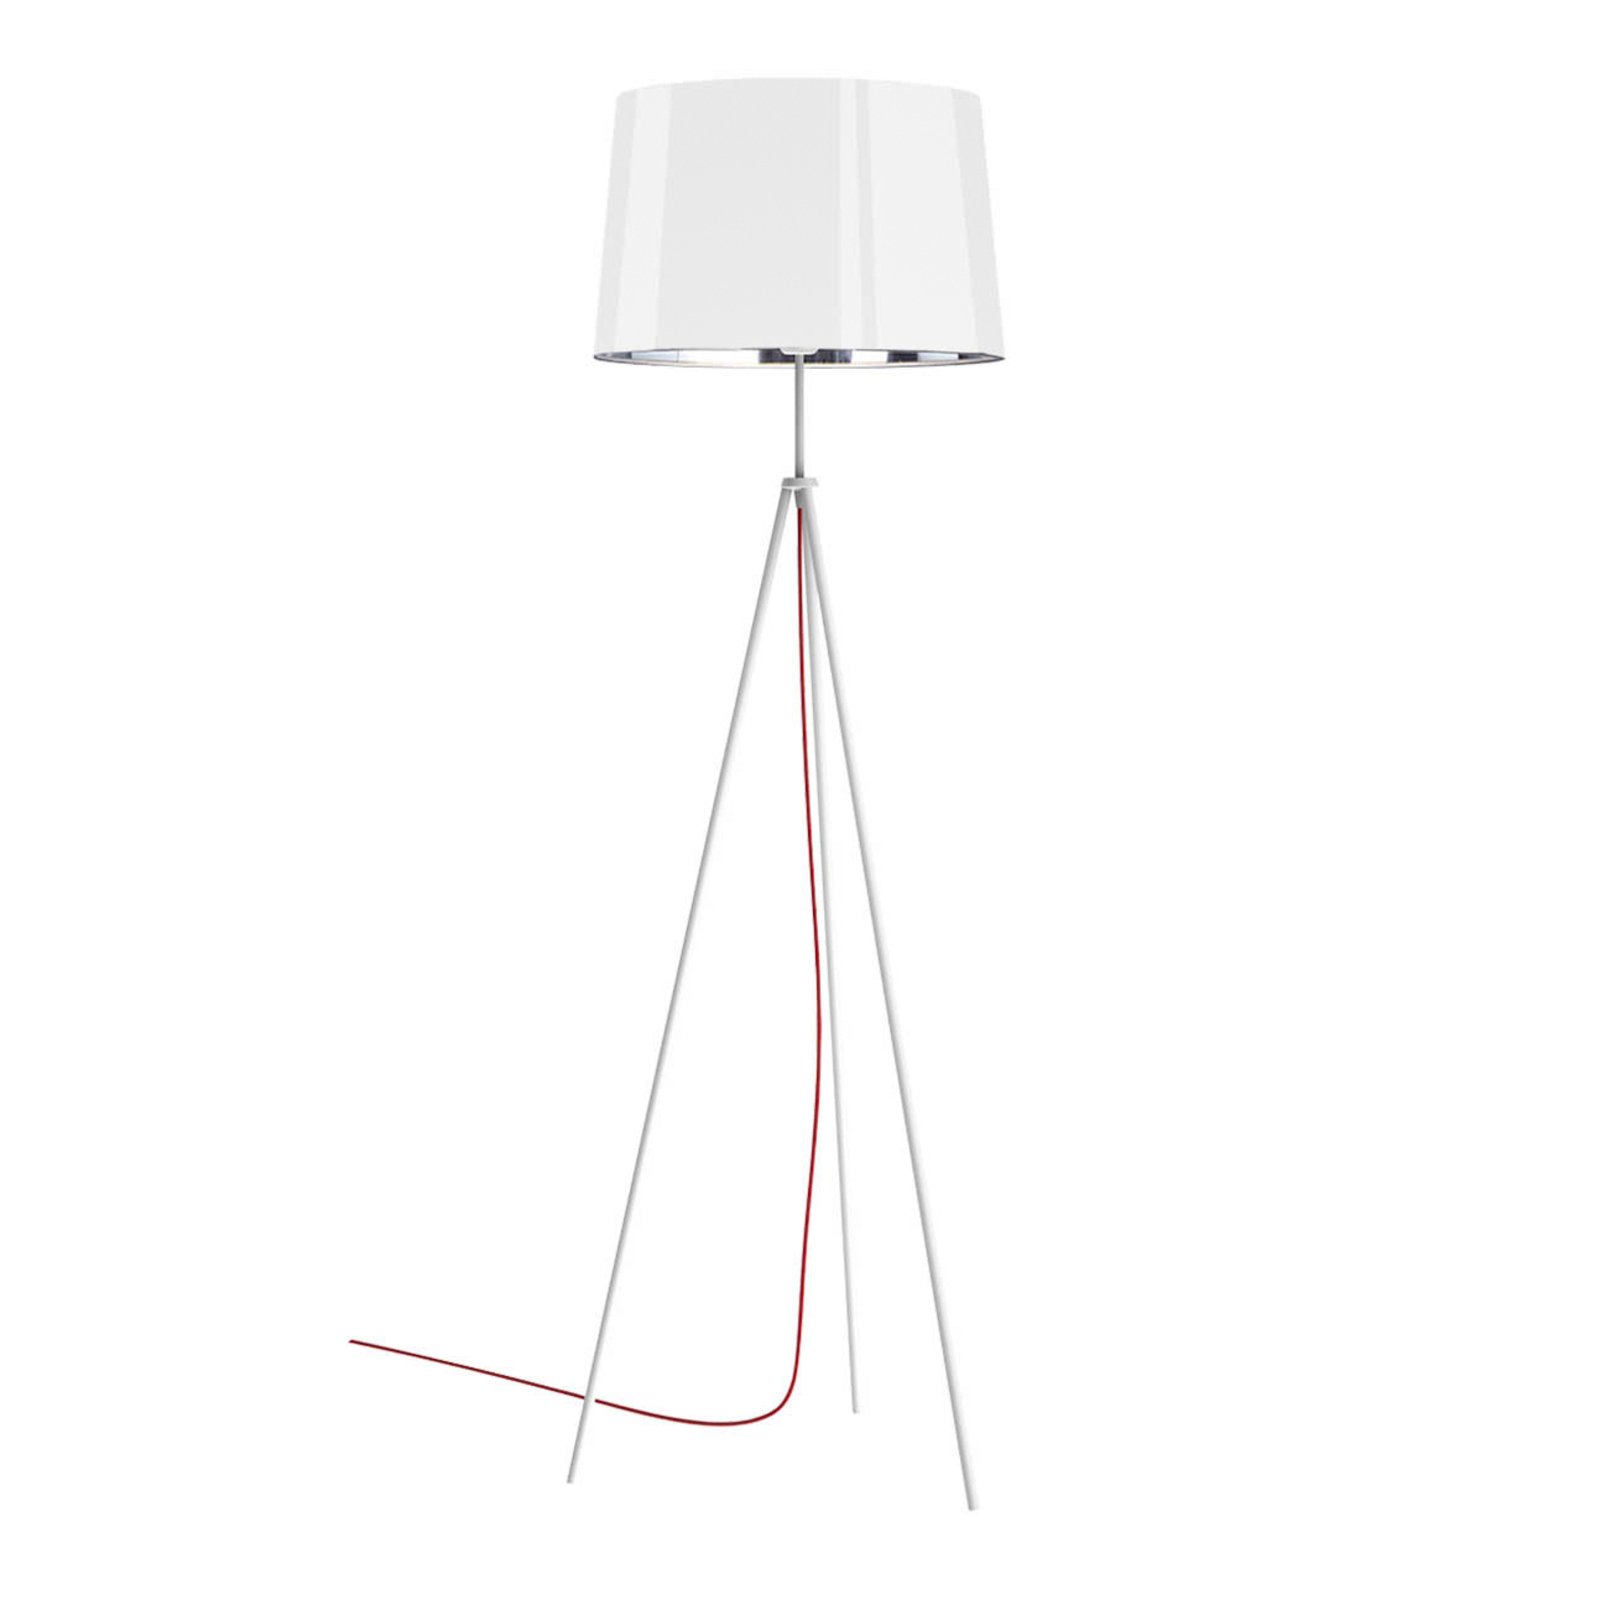 Aluminor Tropic gulvlampe hvit, rød kabel